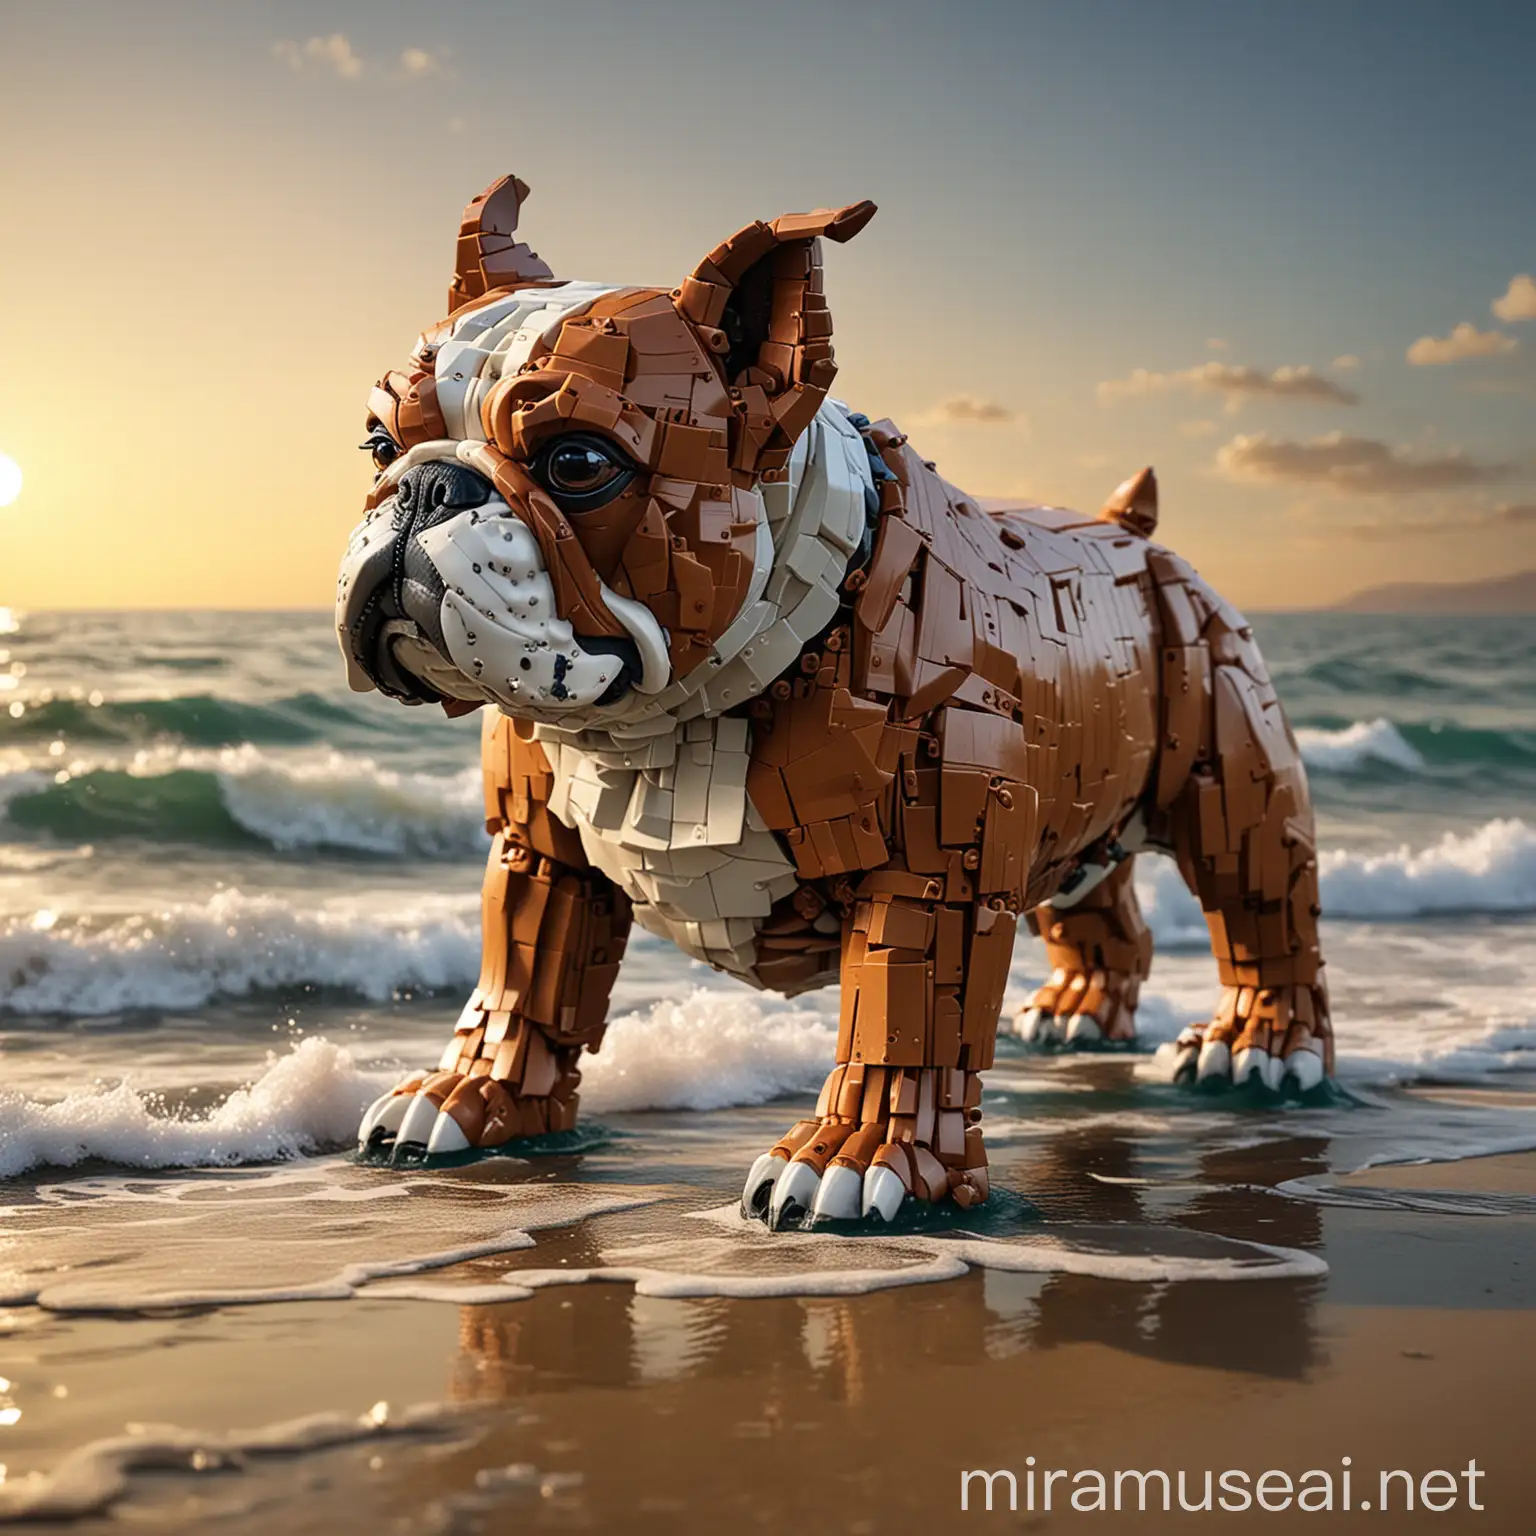 Hyperrealistic French Bulldog Gazing at the Backlit Sea in Lego Style